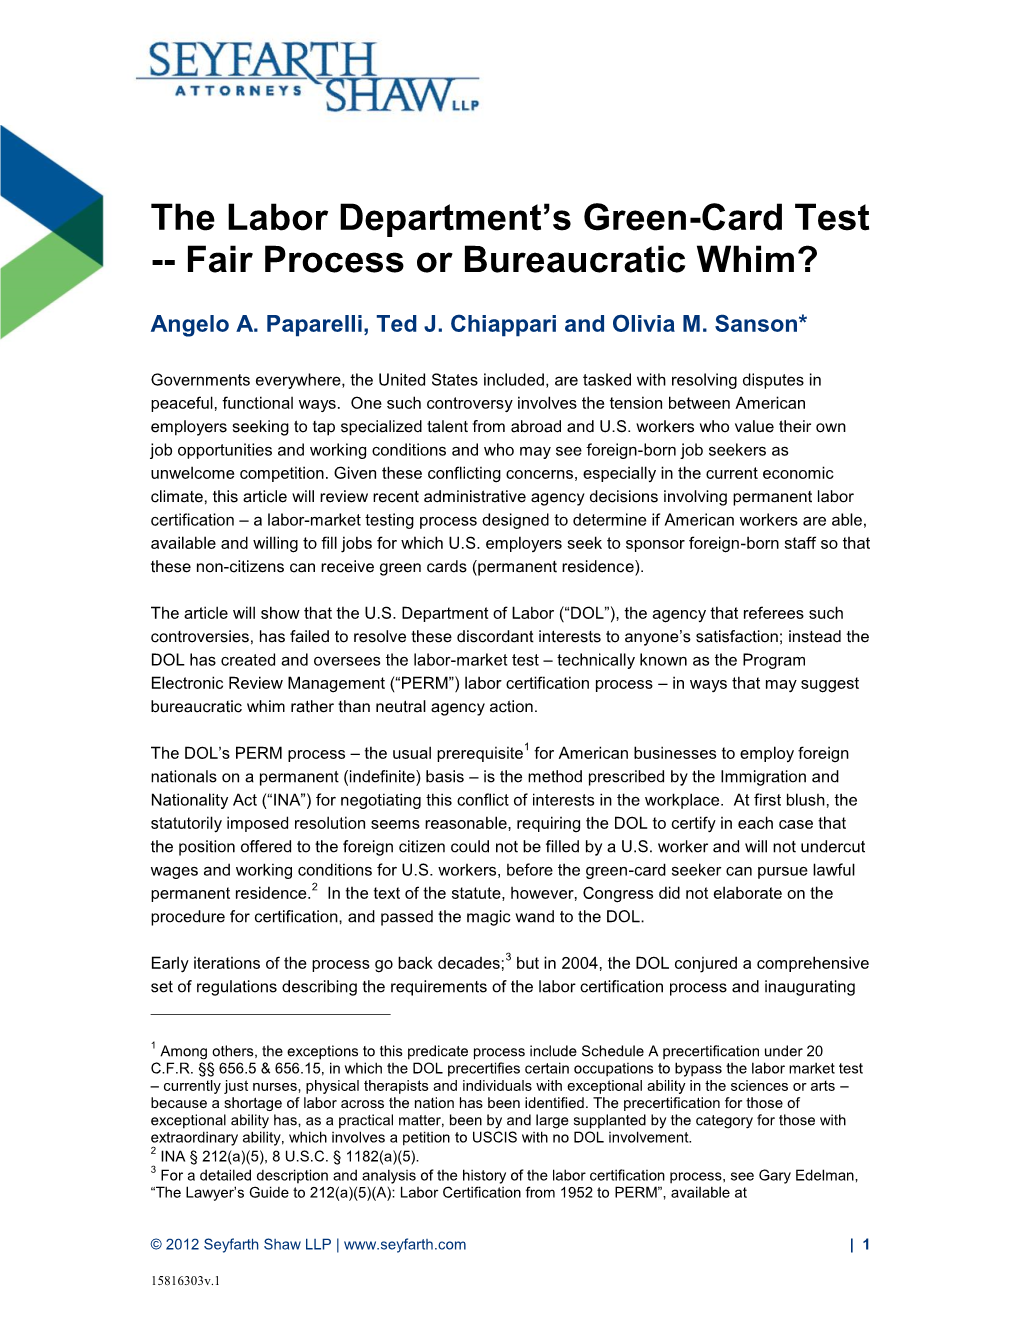 The Labor Department's Green-Card Test -- Fair Process Or Bureaucratic